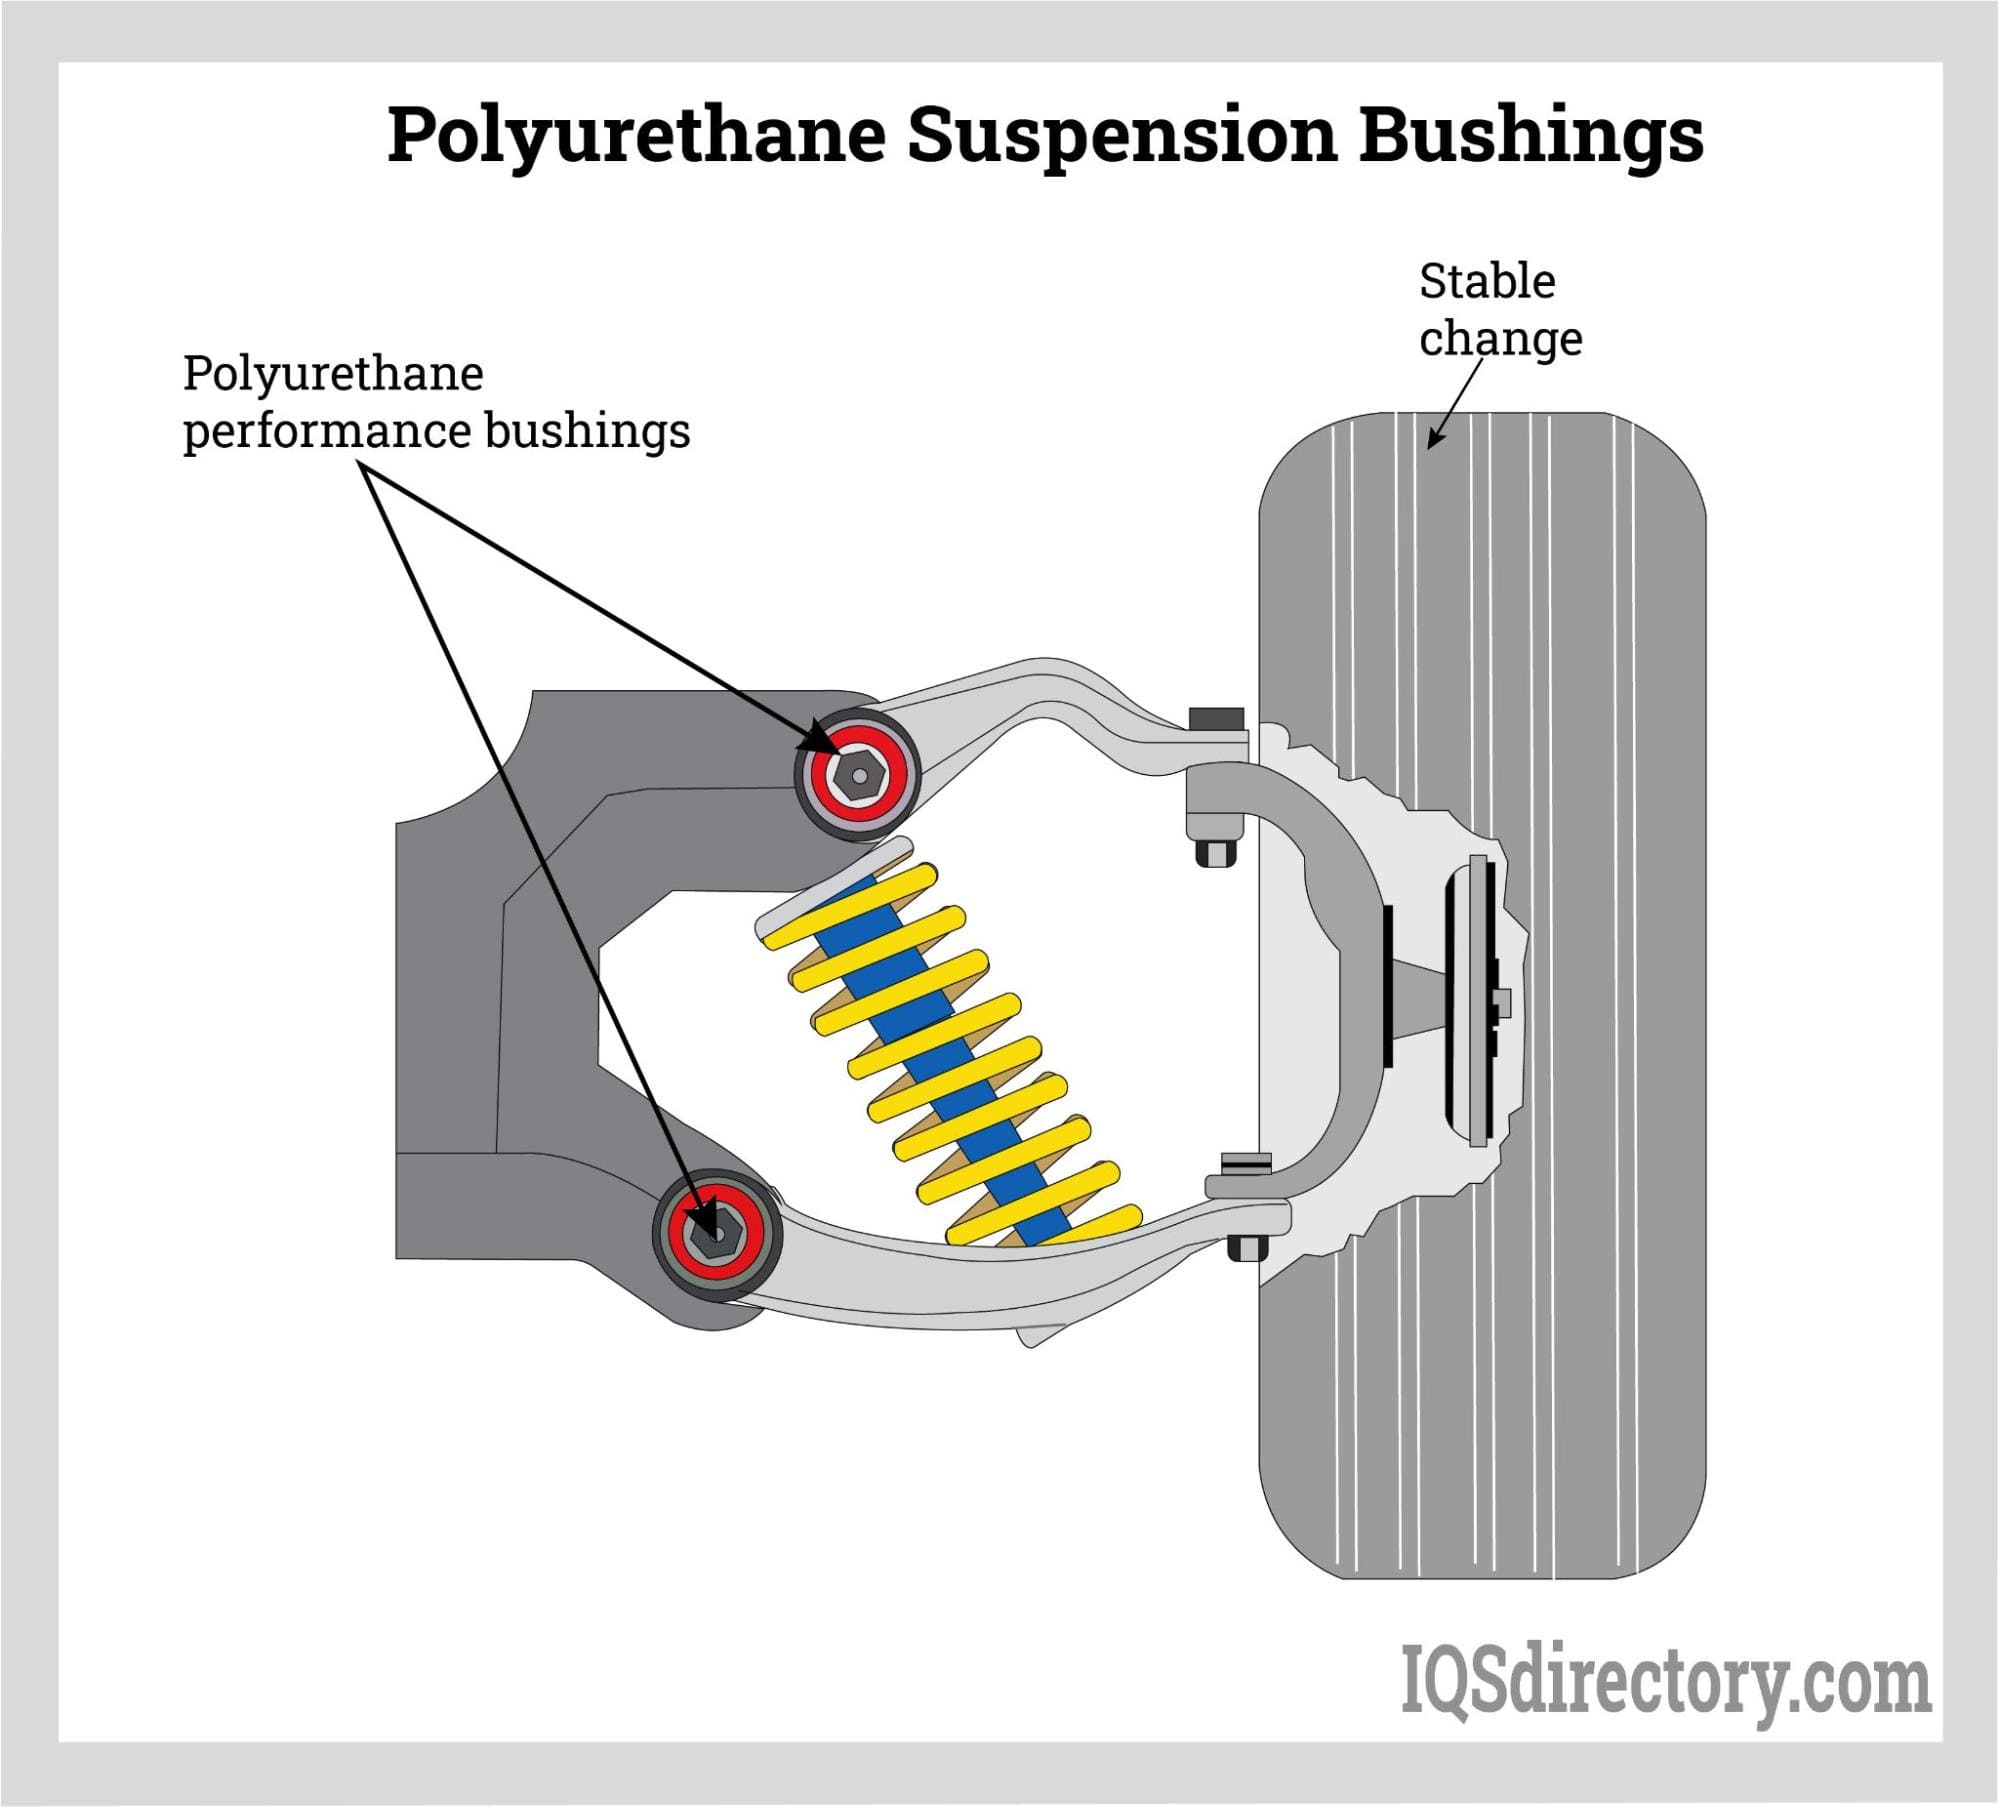 Polyurethane Suspension Bushings